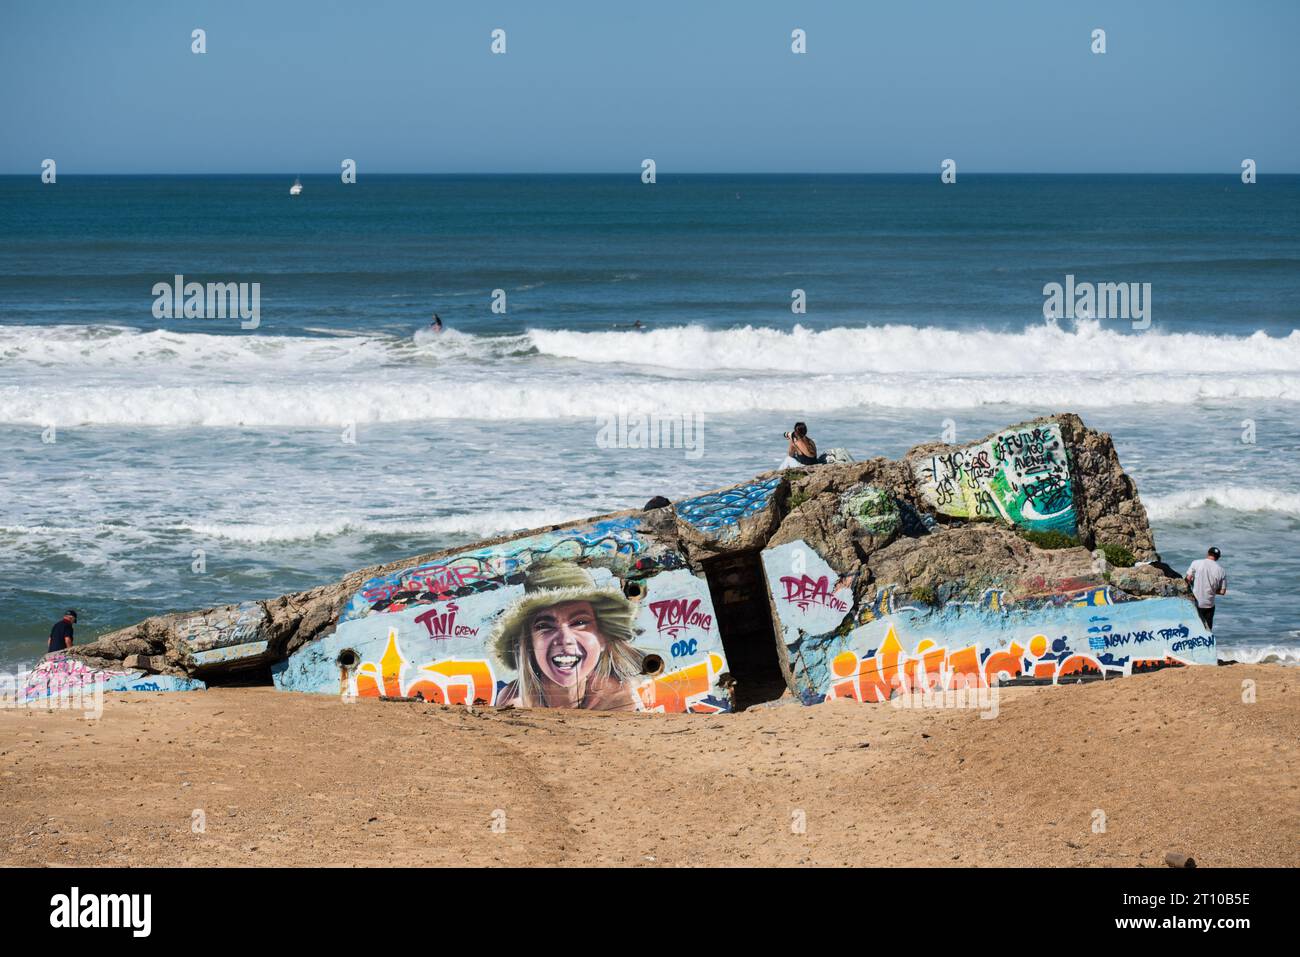 Bunker e cultura del surf della seconda guerra mondiale, Cote des Basques, Francia Foto Stock